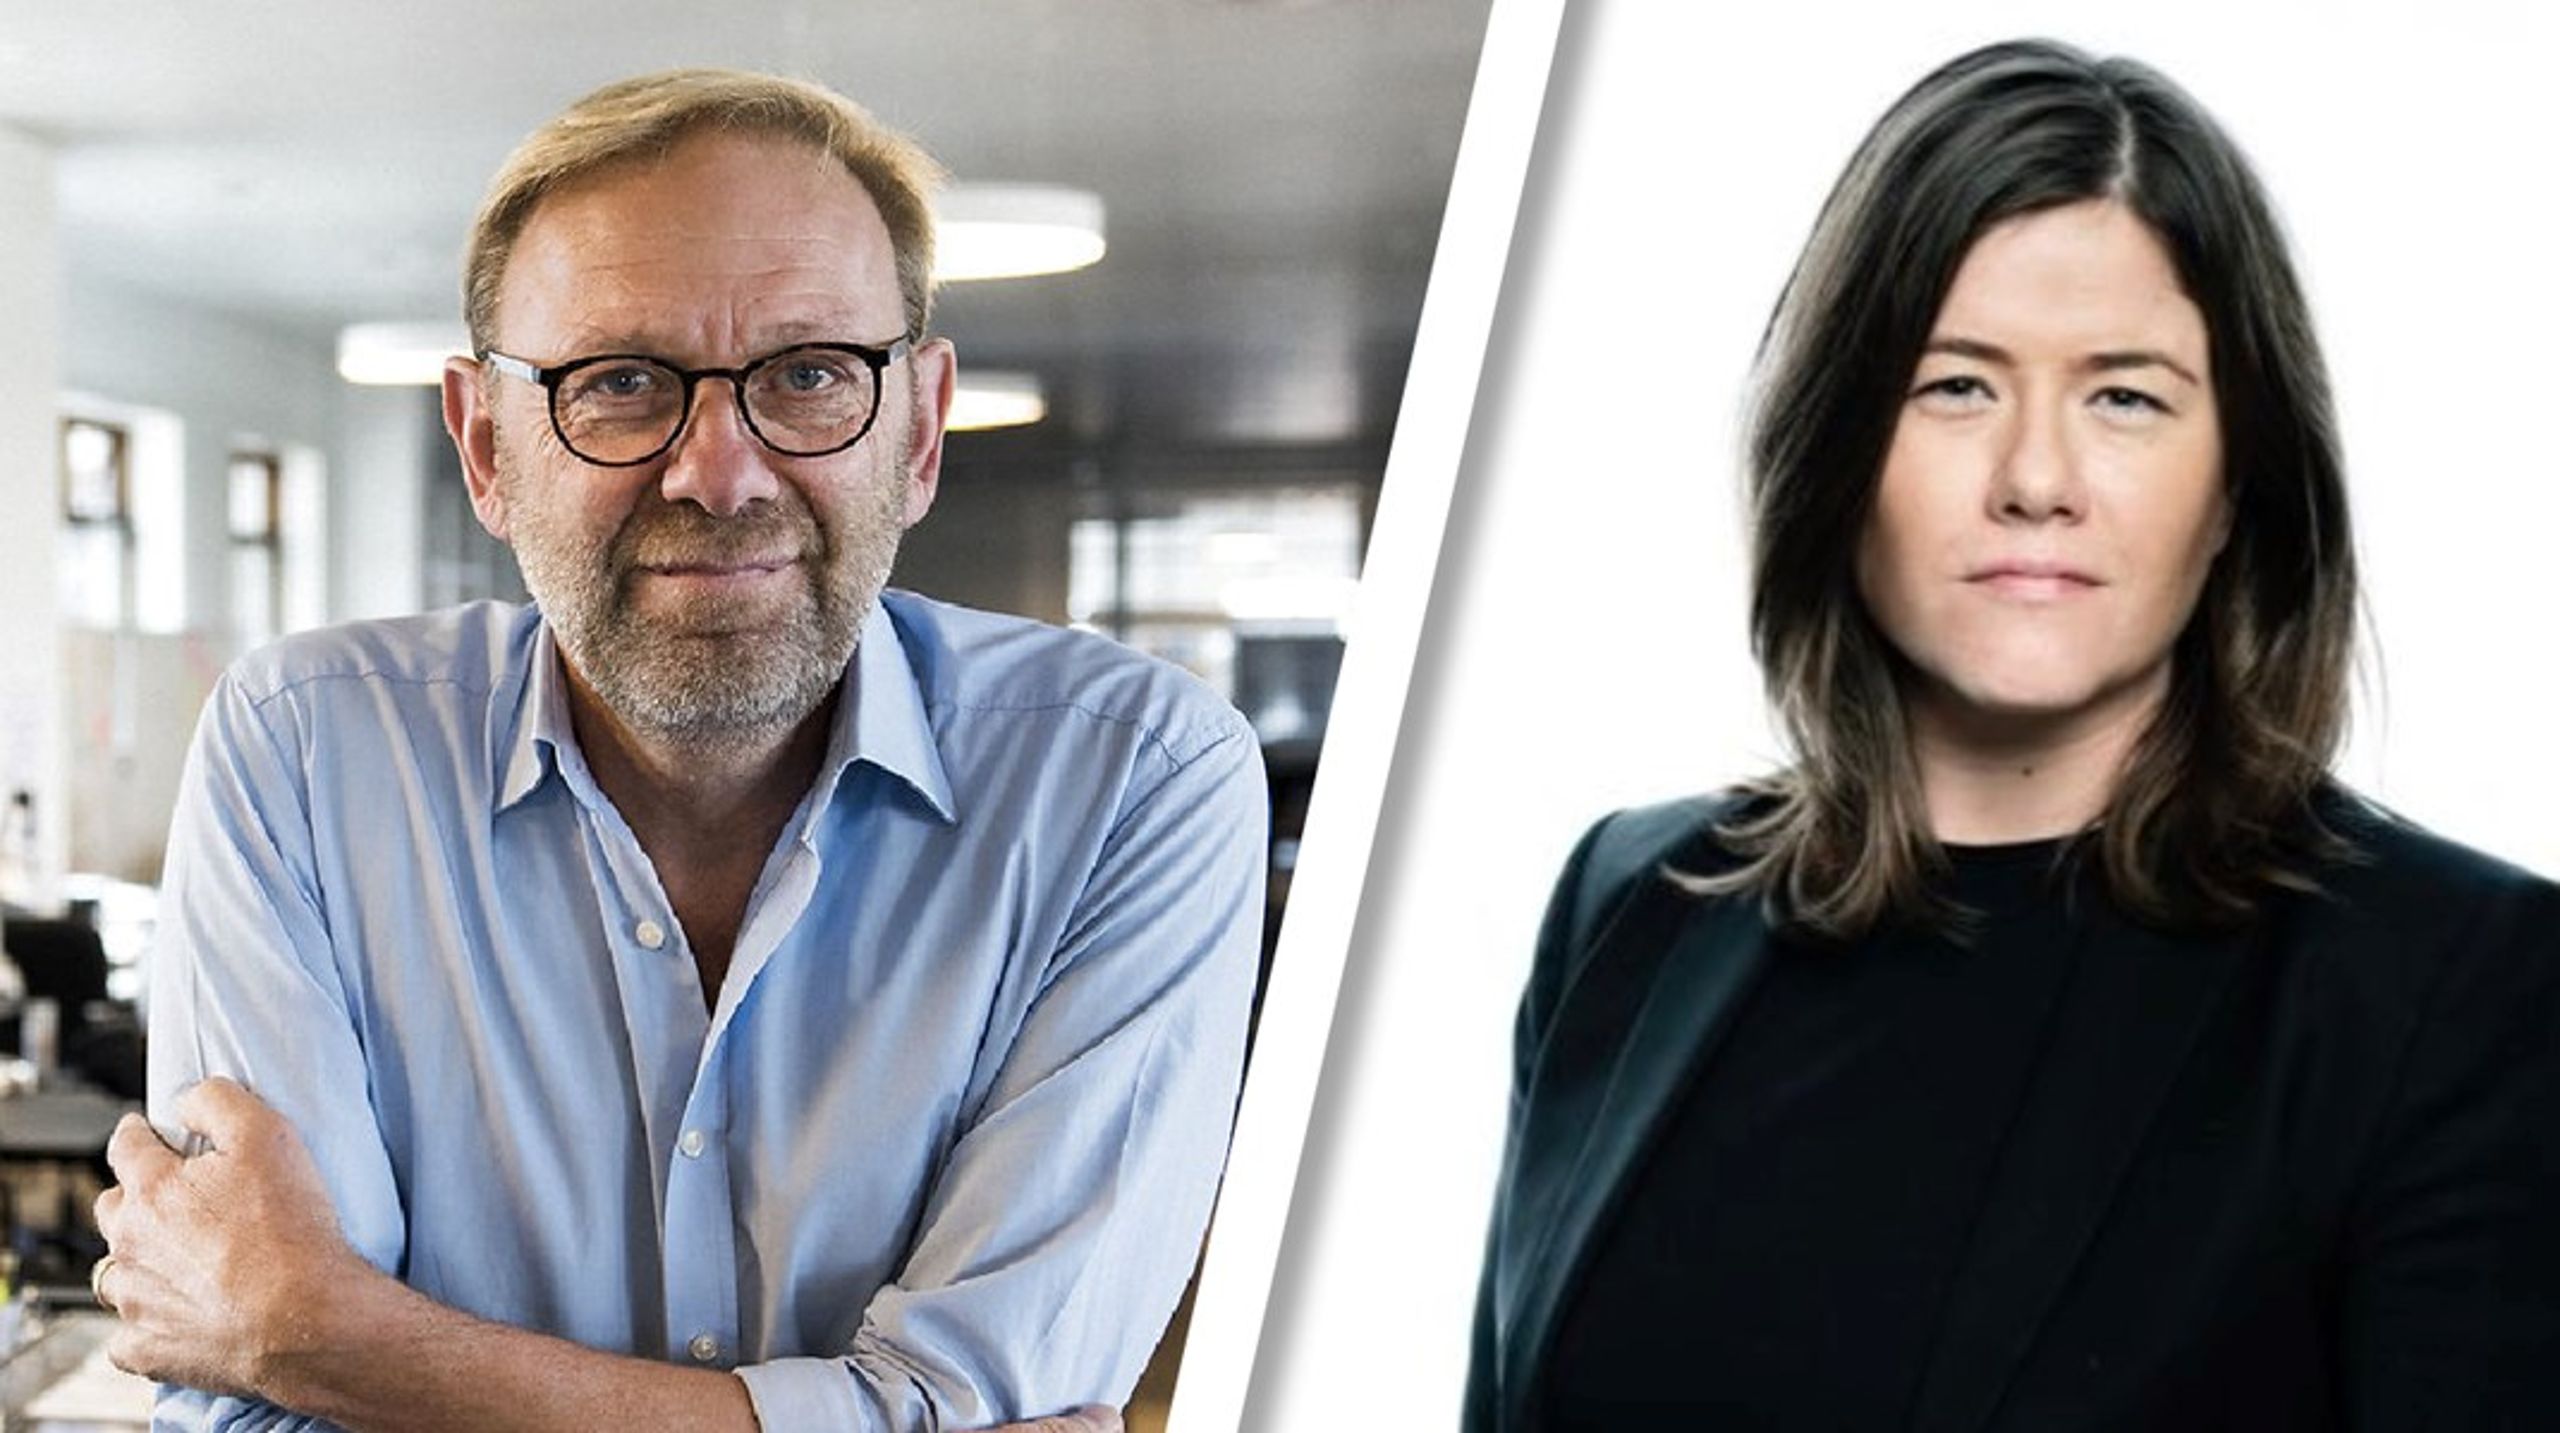 Fire måneder efter Michael Dyrby stoppede som ansvarshavende chefredaktør skal Pernille Holbøll nu stå i spidsen for B.T.